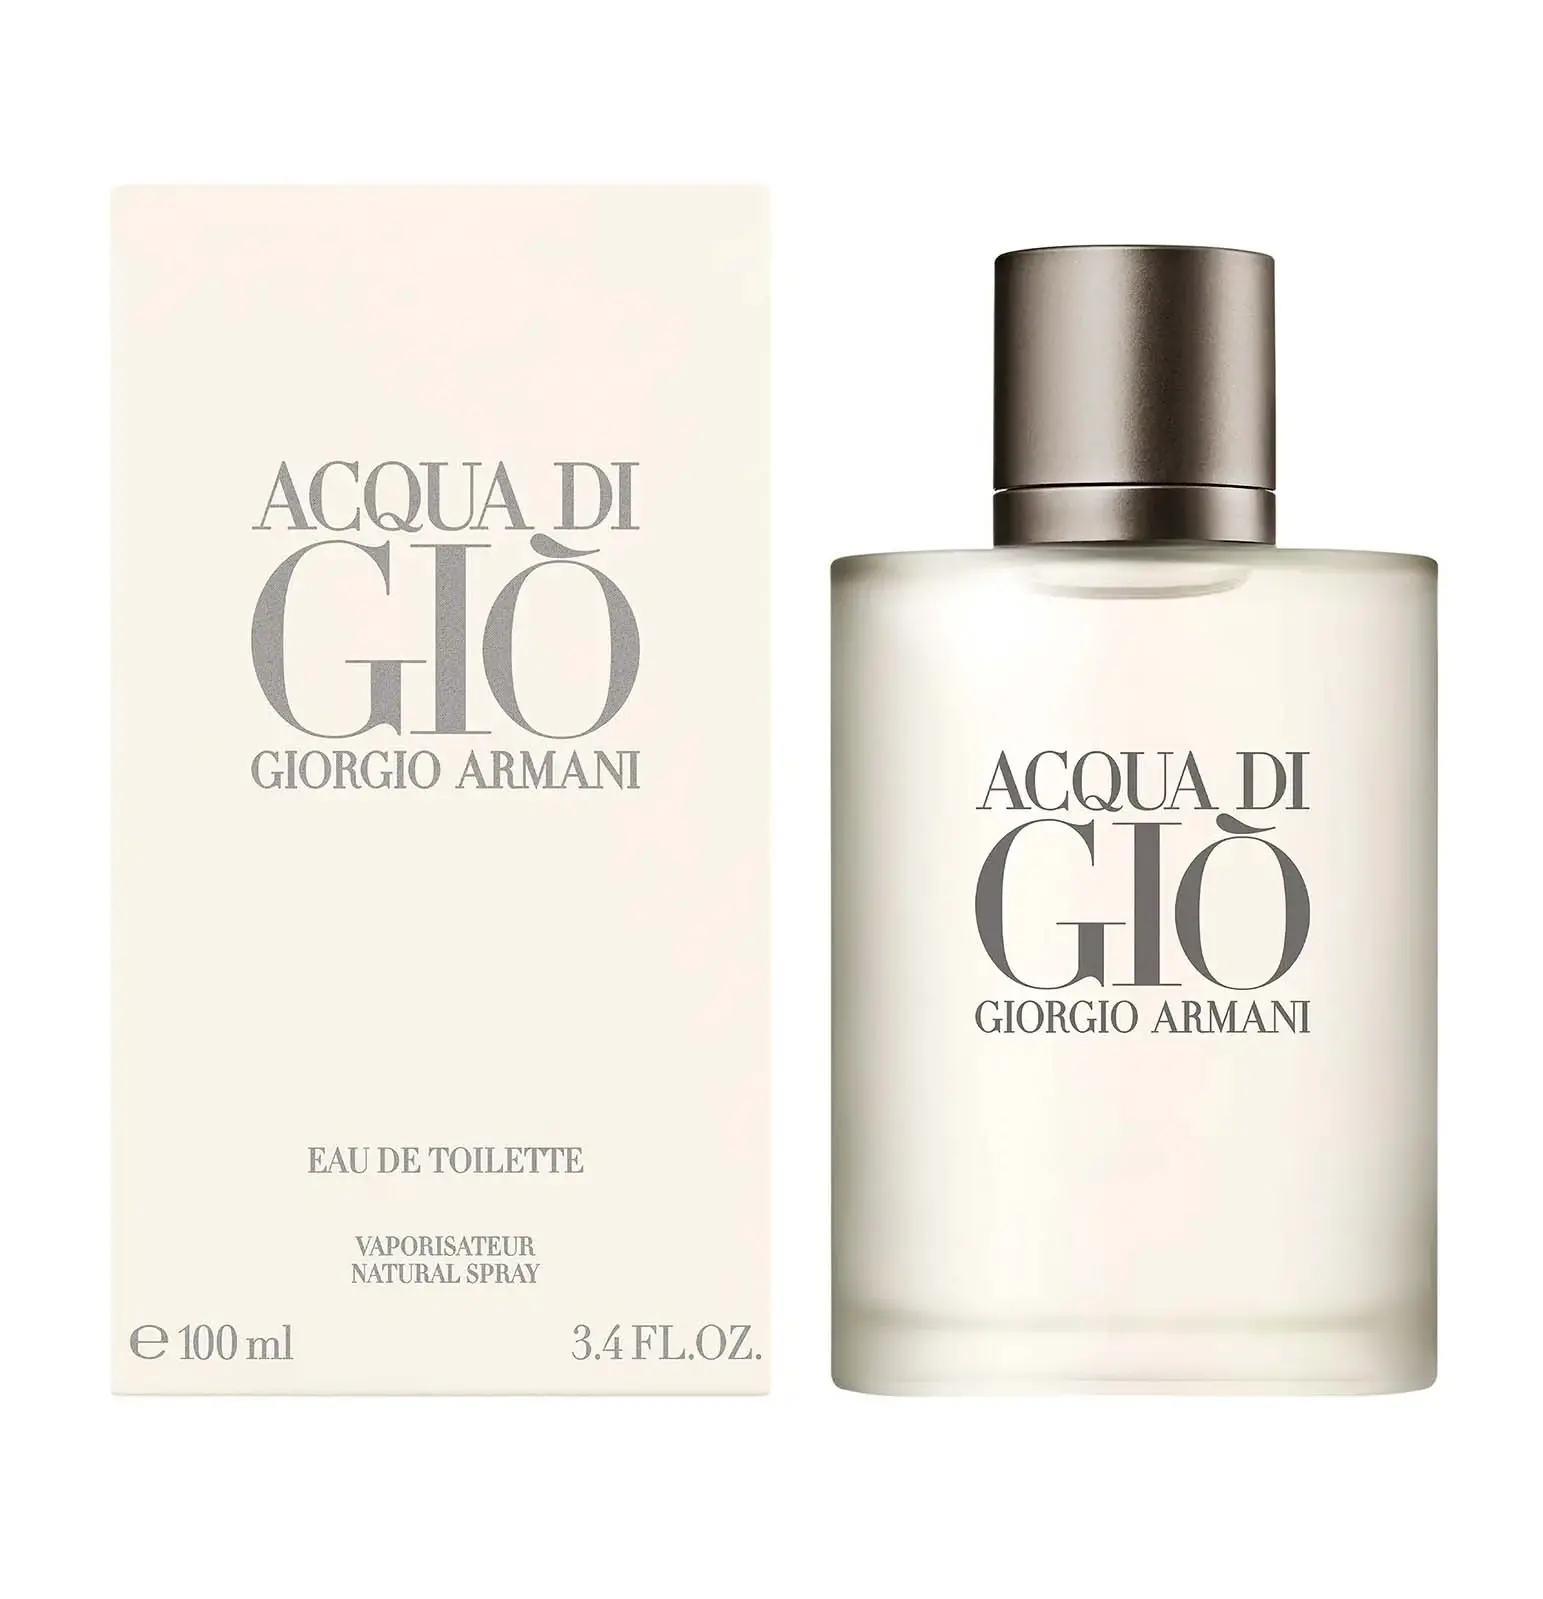 Купить туалетную воду Acqua Di Gio Giorgio Armani — духи и парфюм Аква Ди  Джио Армани — цена и описание аромата в интернет-магазине 